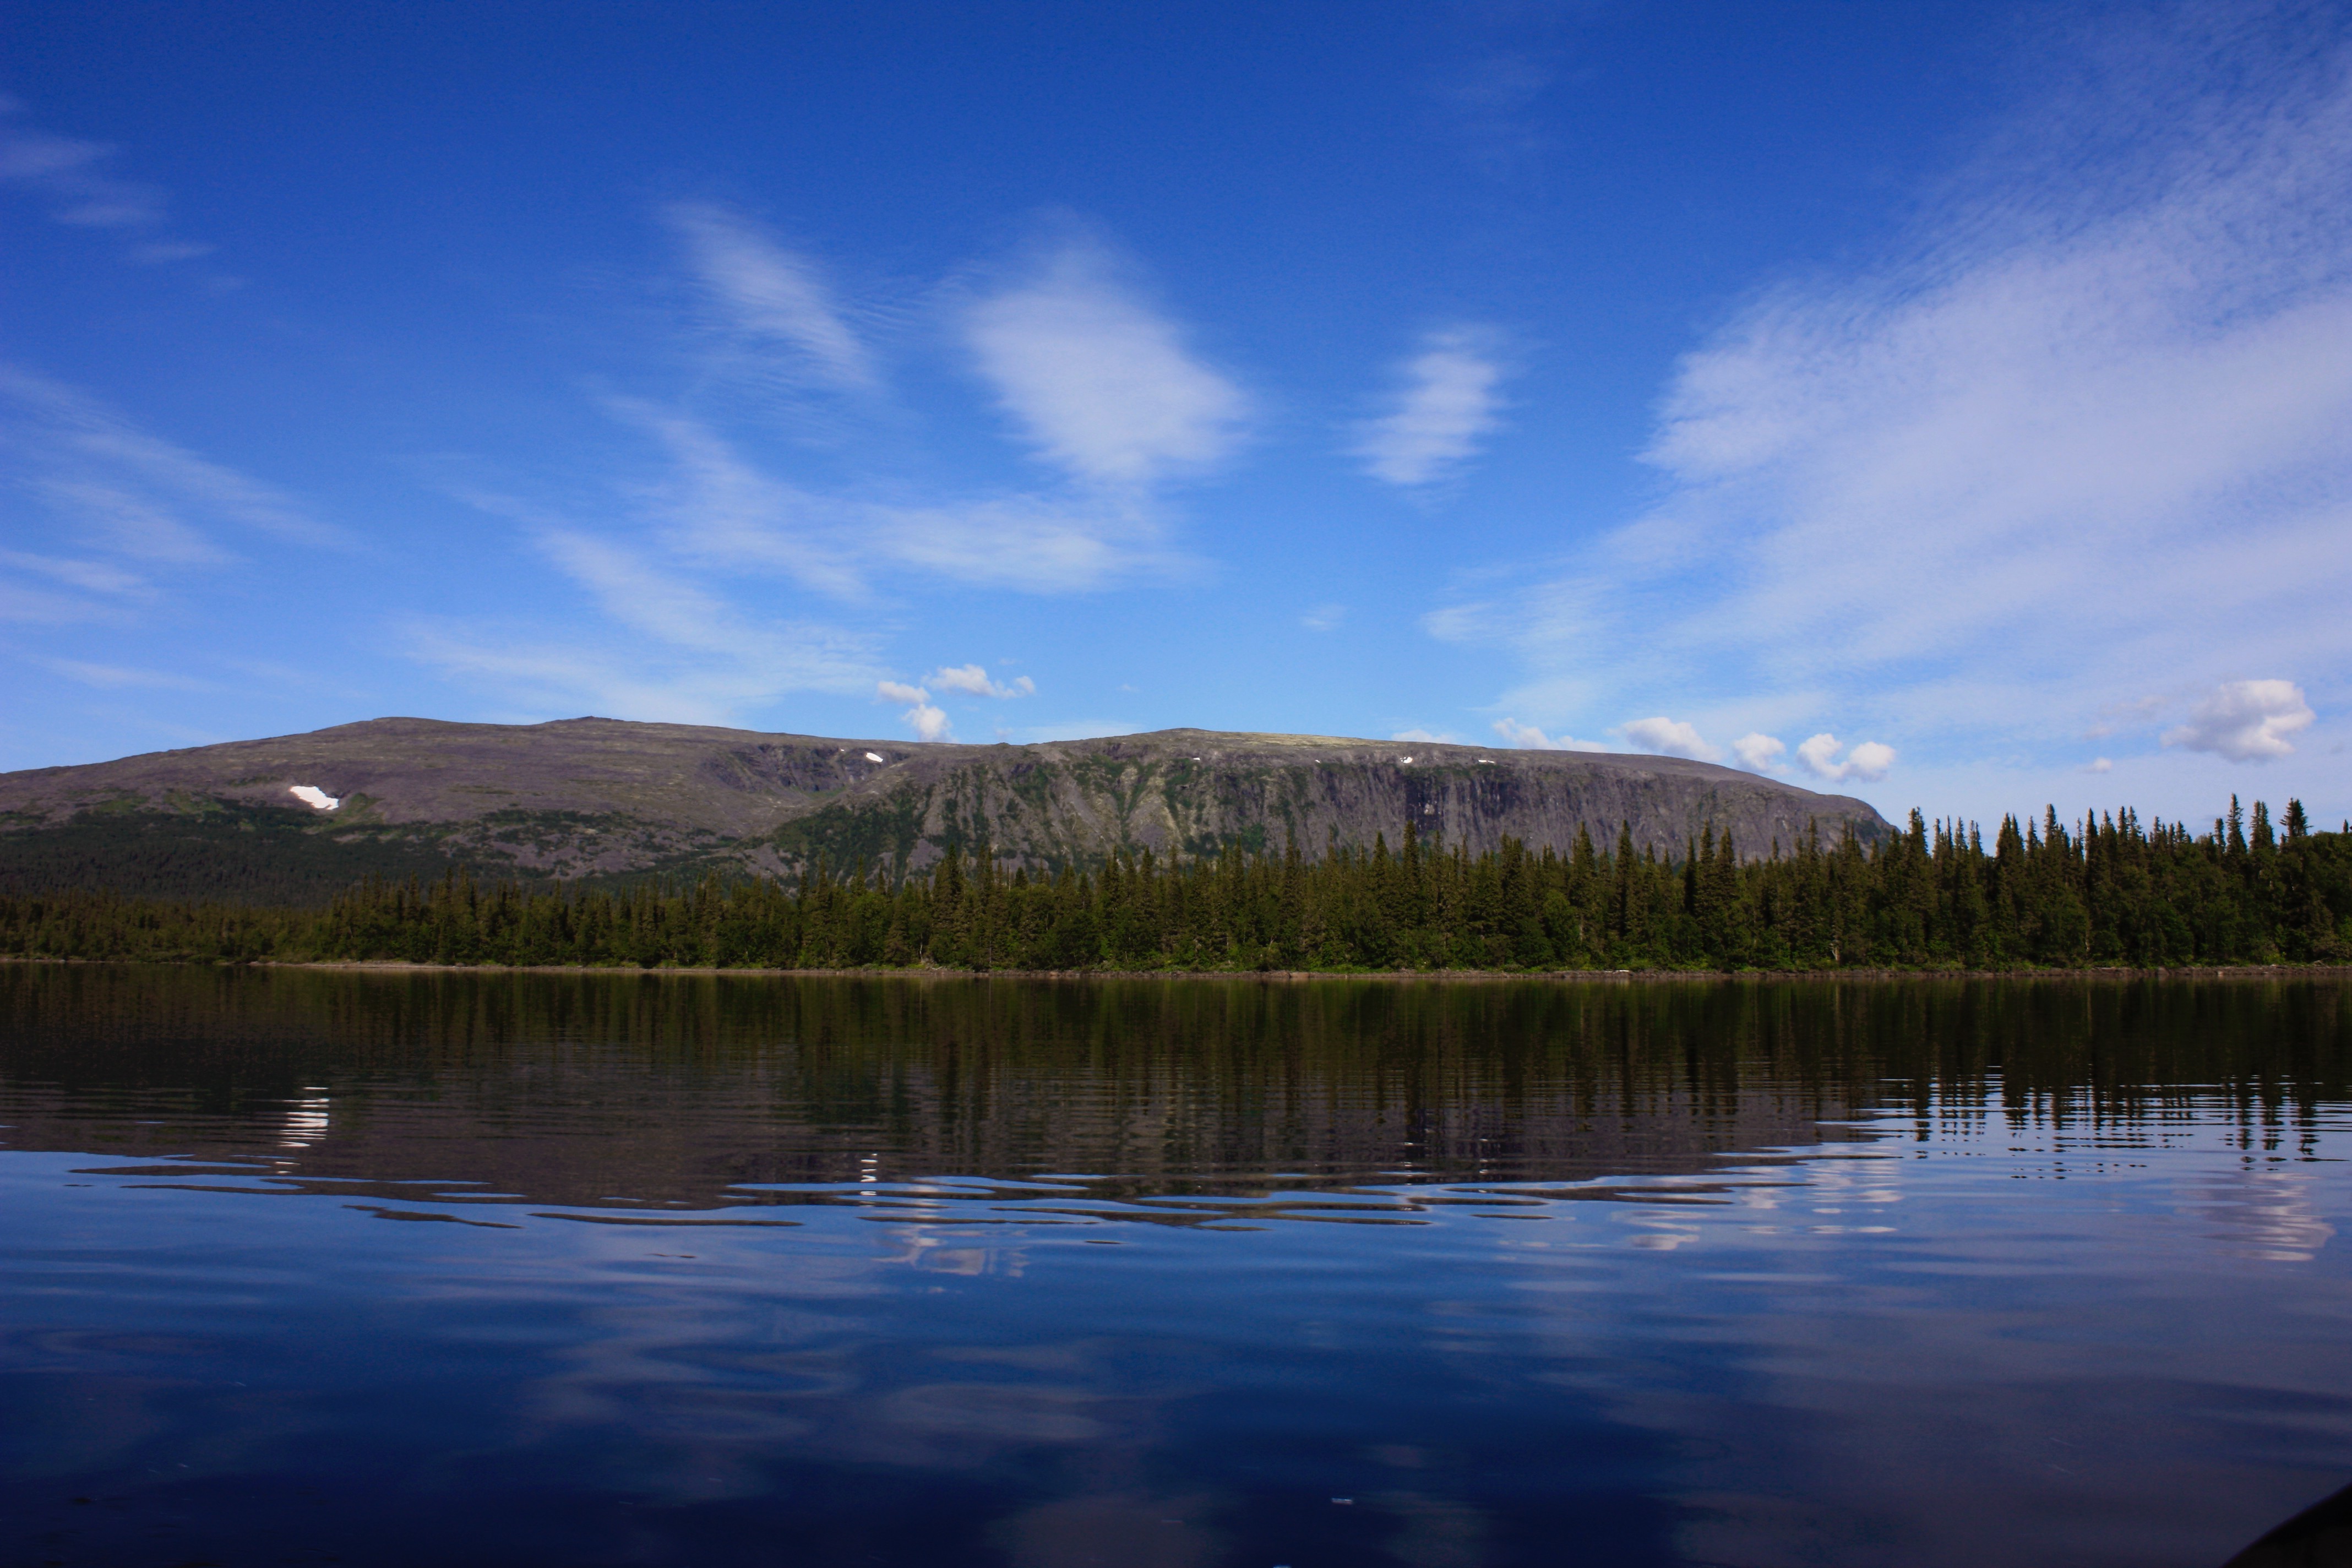 Landscape Karelia Wallpapers Hd Desktop And Mobile Backgrounds Images, Photos, Reviews